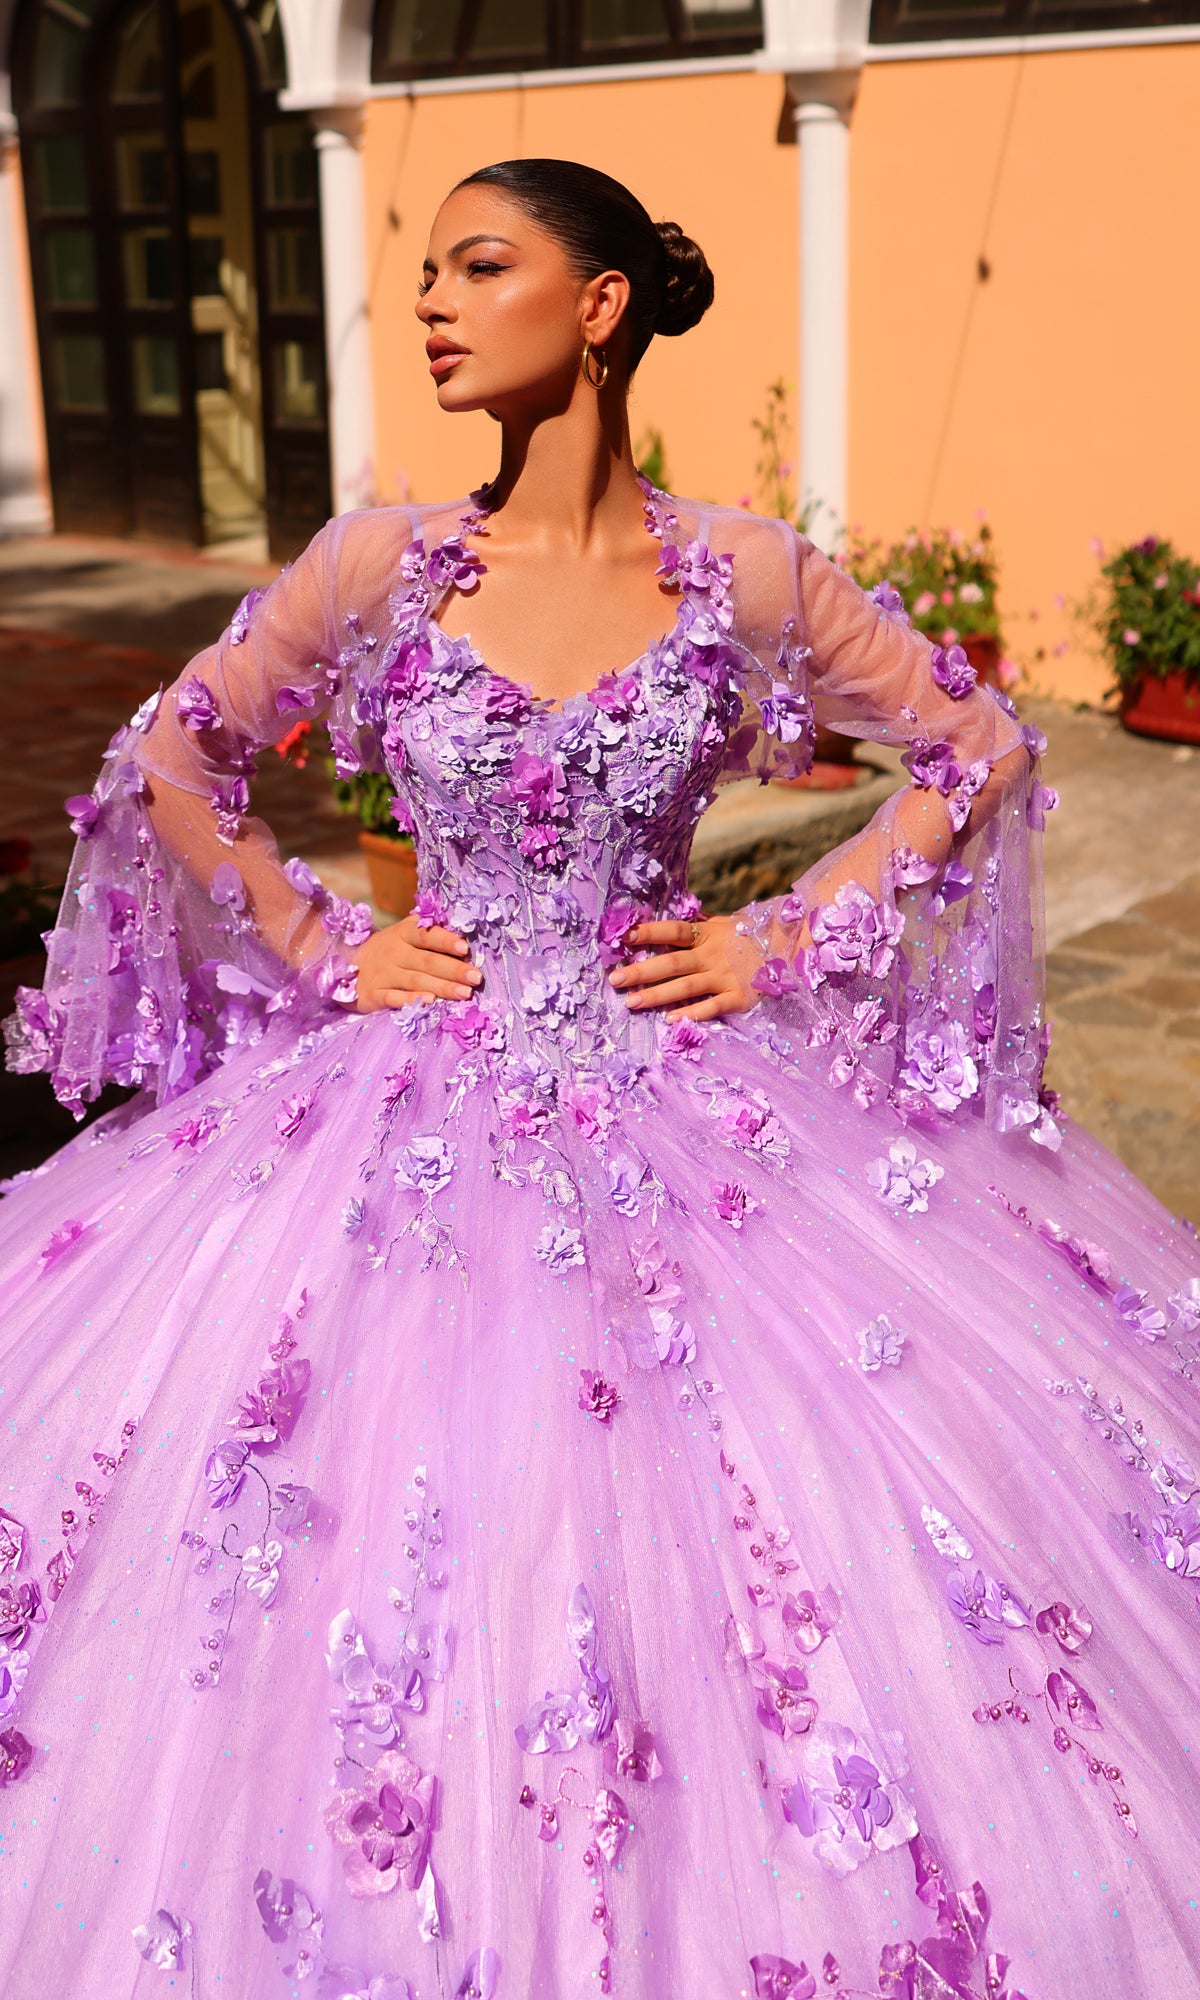 pink and purple dress